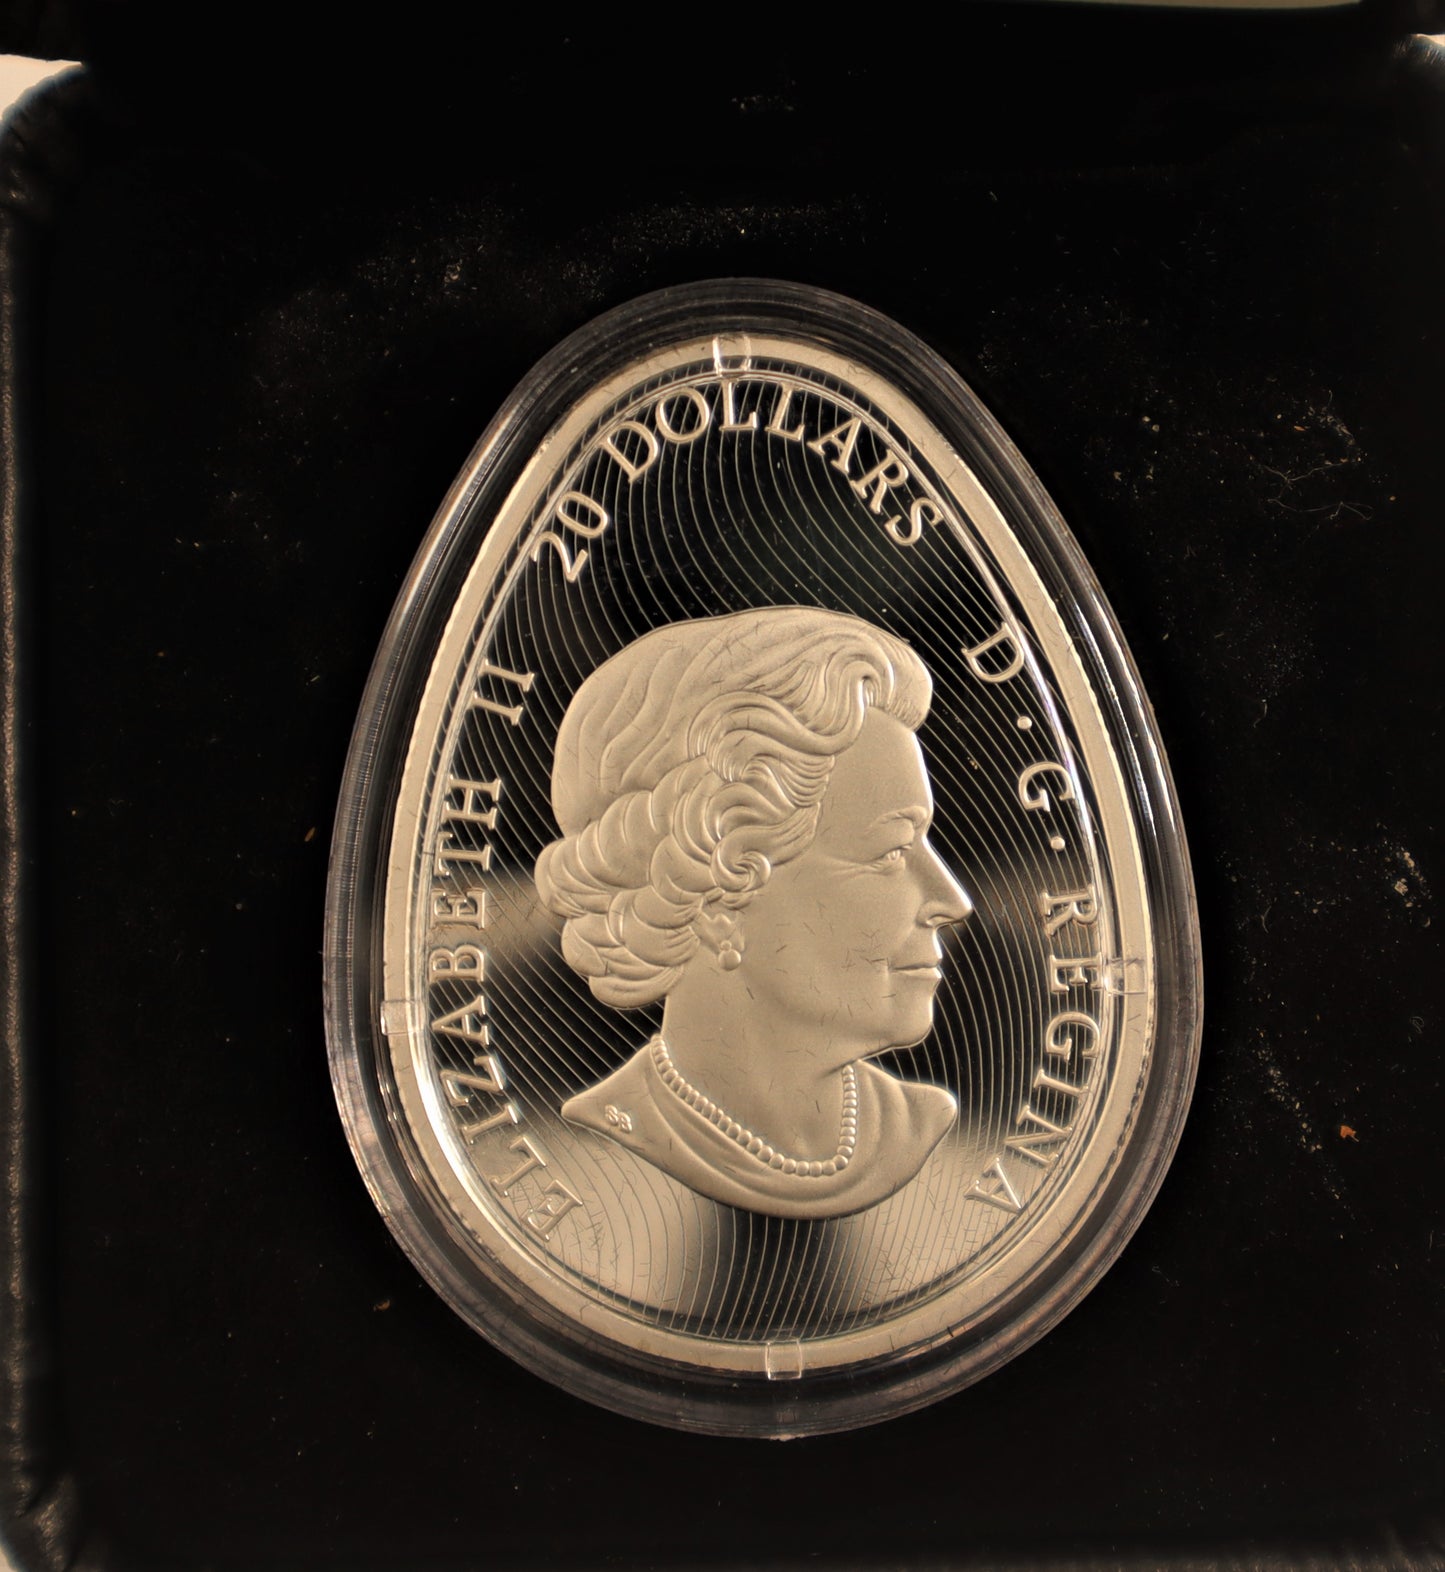 2020 $20 Fine Silver Coin Traditional Pysanka